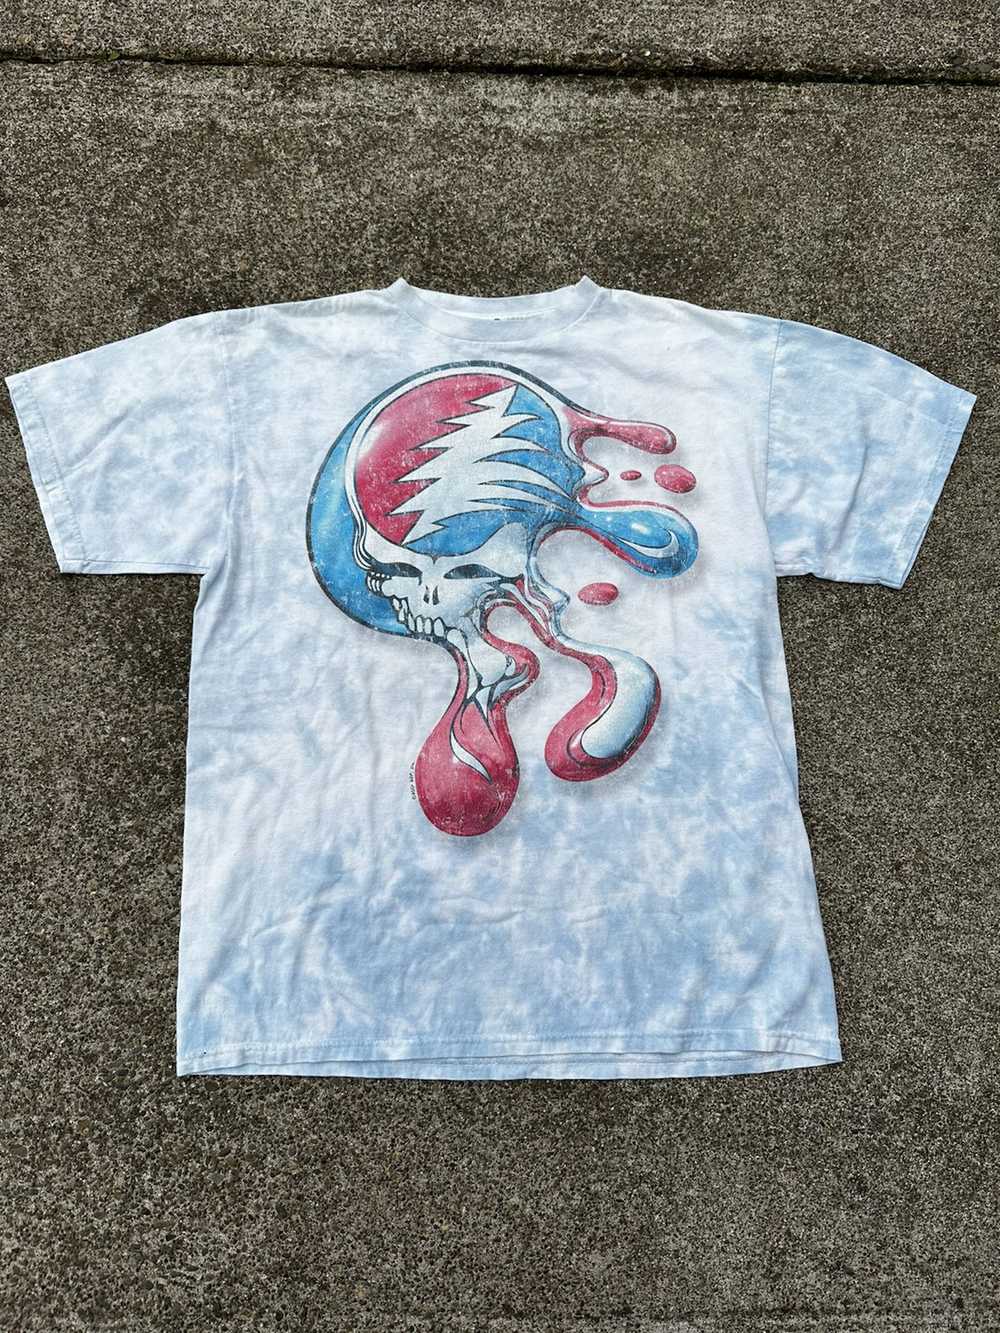 Vintage Grateful Dead Concert T Shirt 2003 Steal Your Face Liquid Blue –  Black Shag Vintage